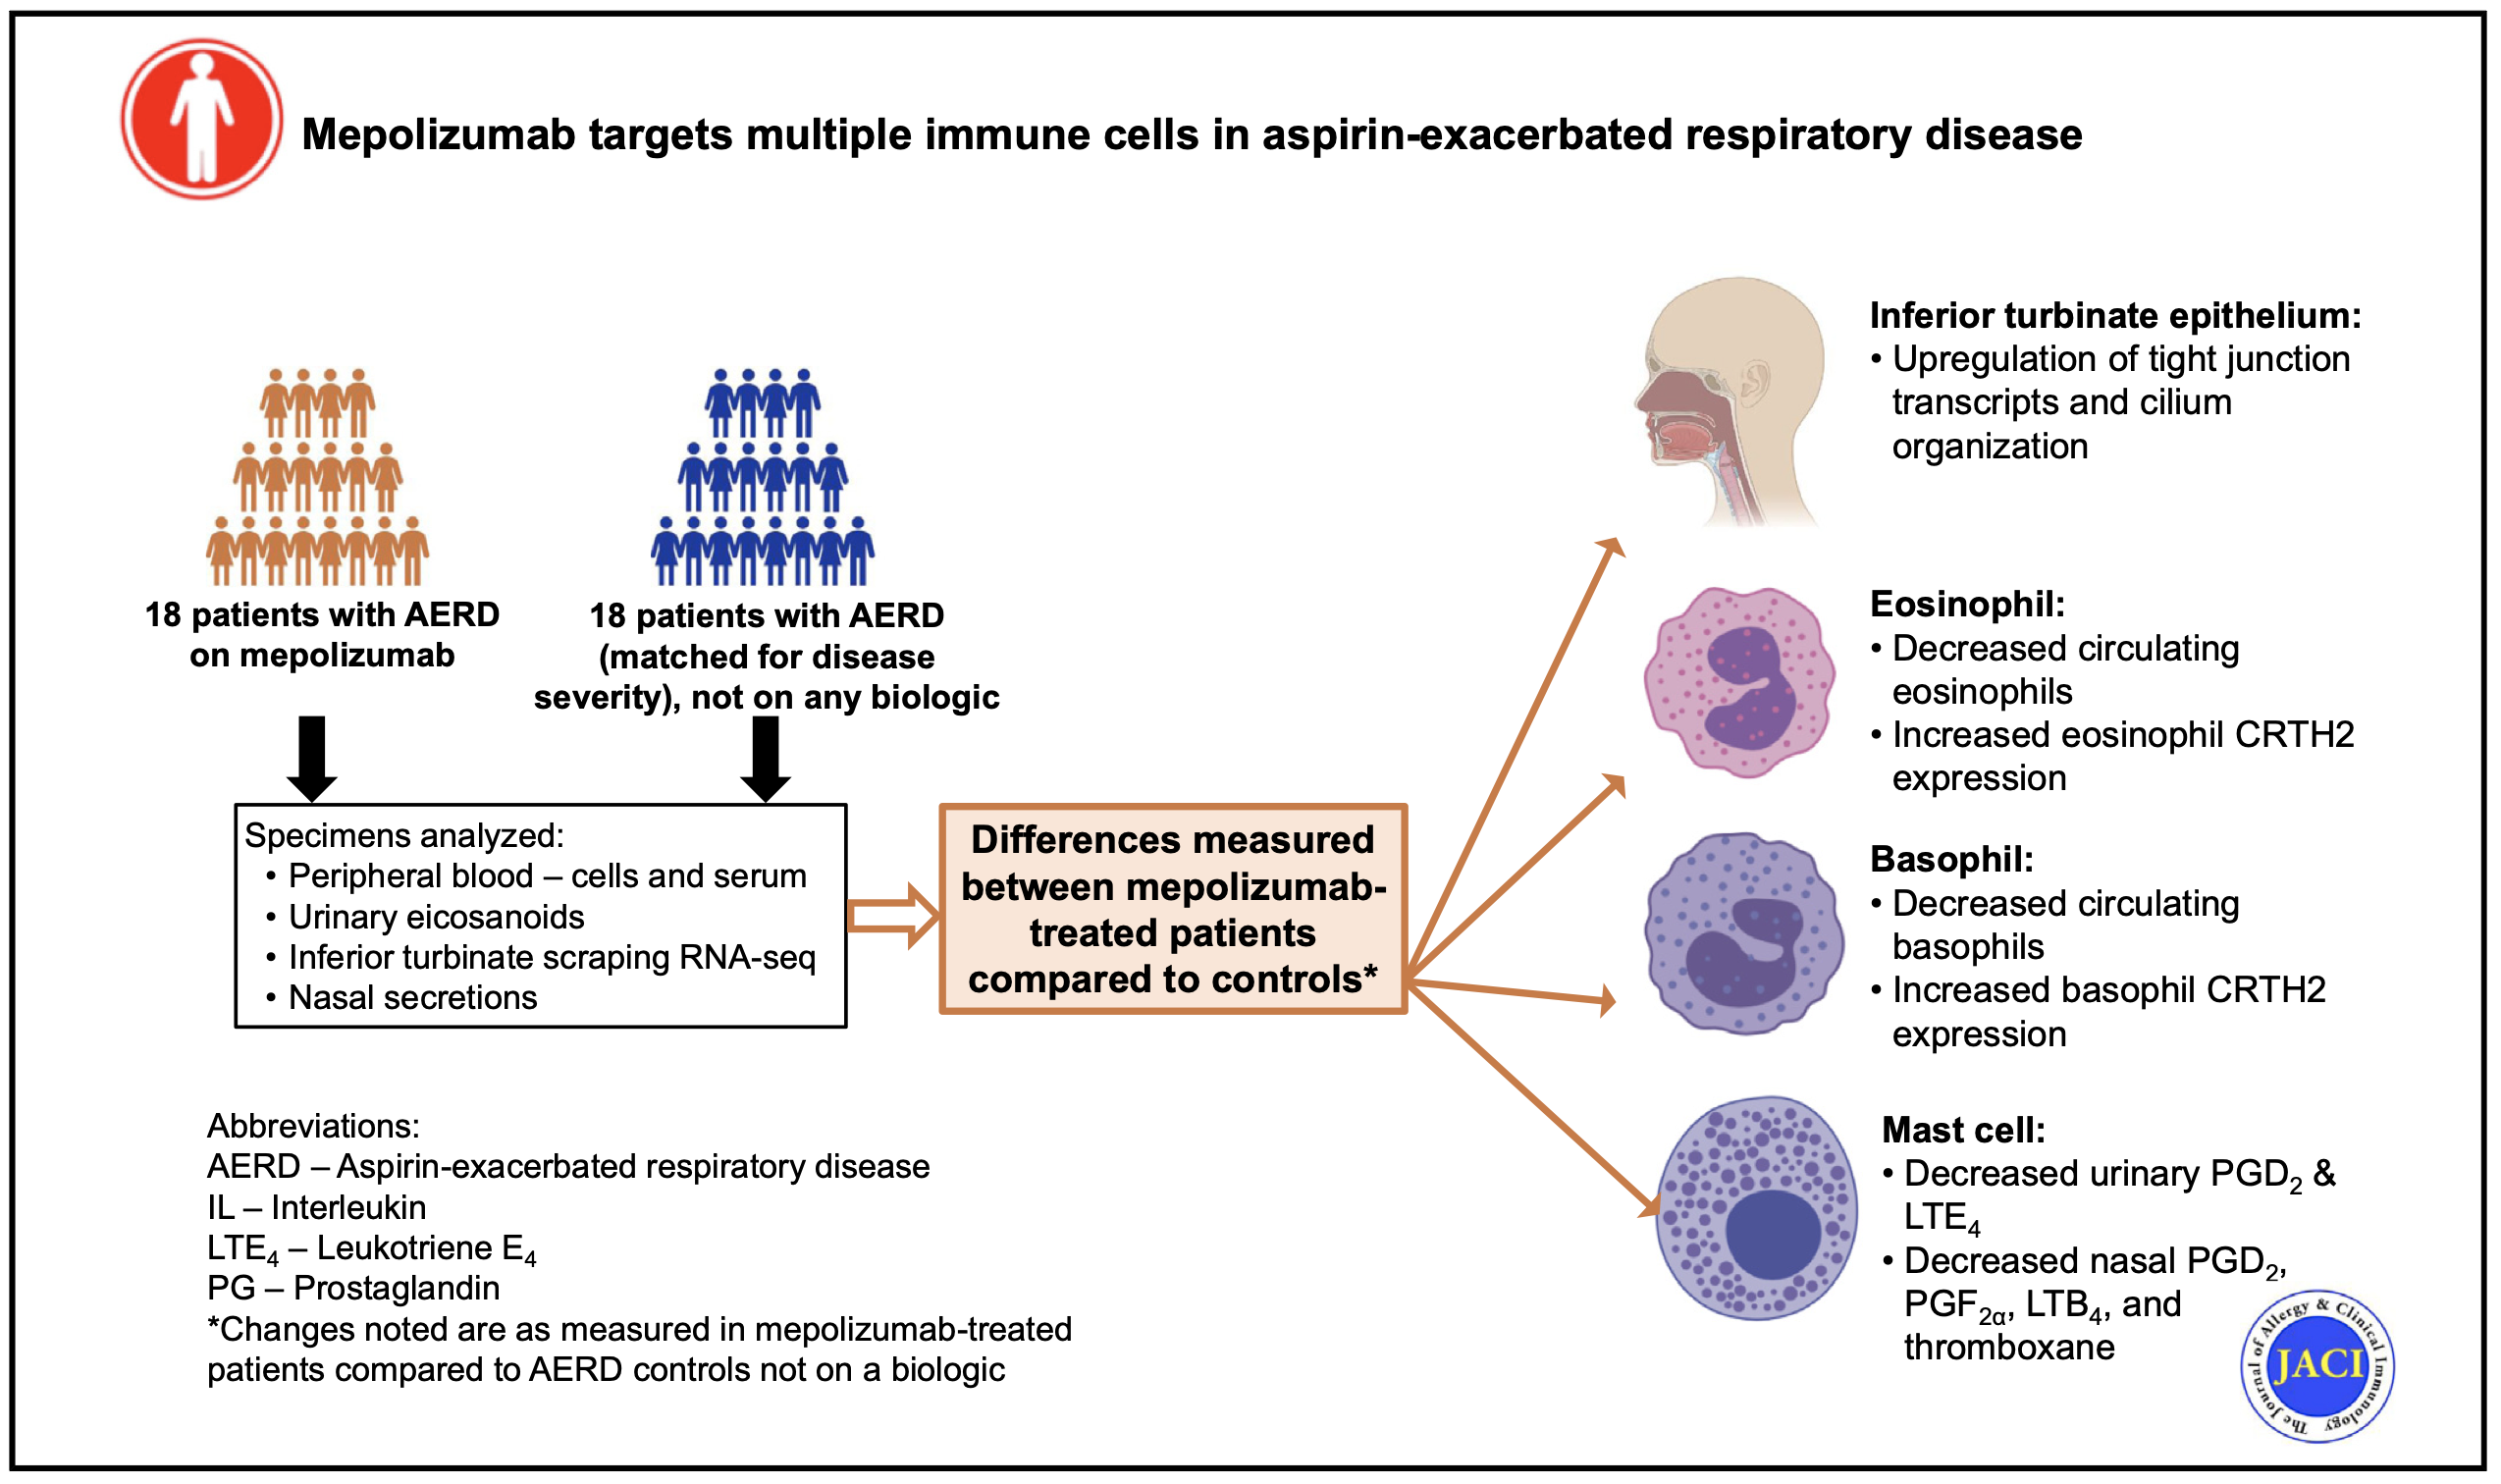 Mepolizumab targets multiple immune cells in aspirin-exacerbated respiratory disease